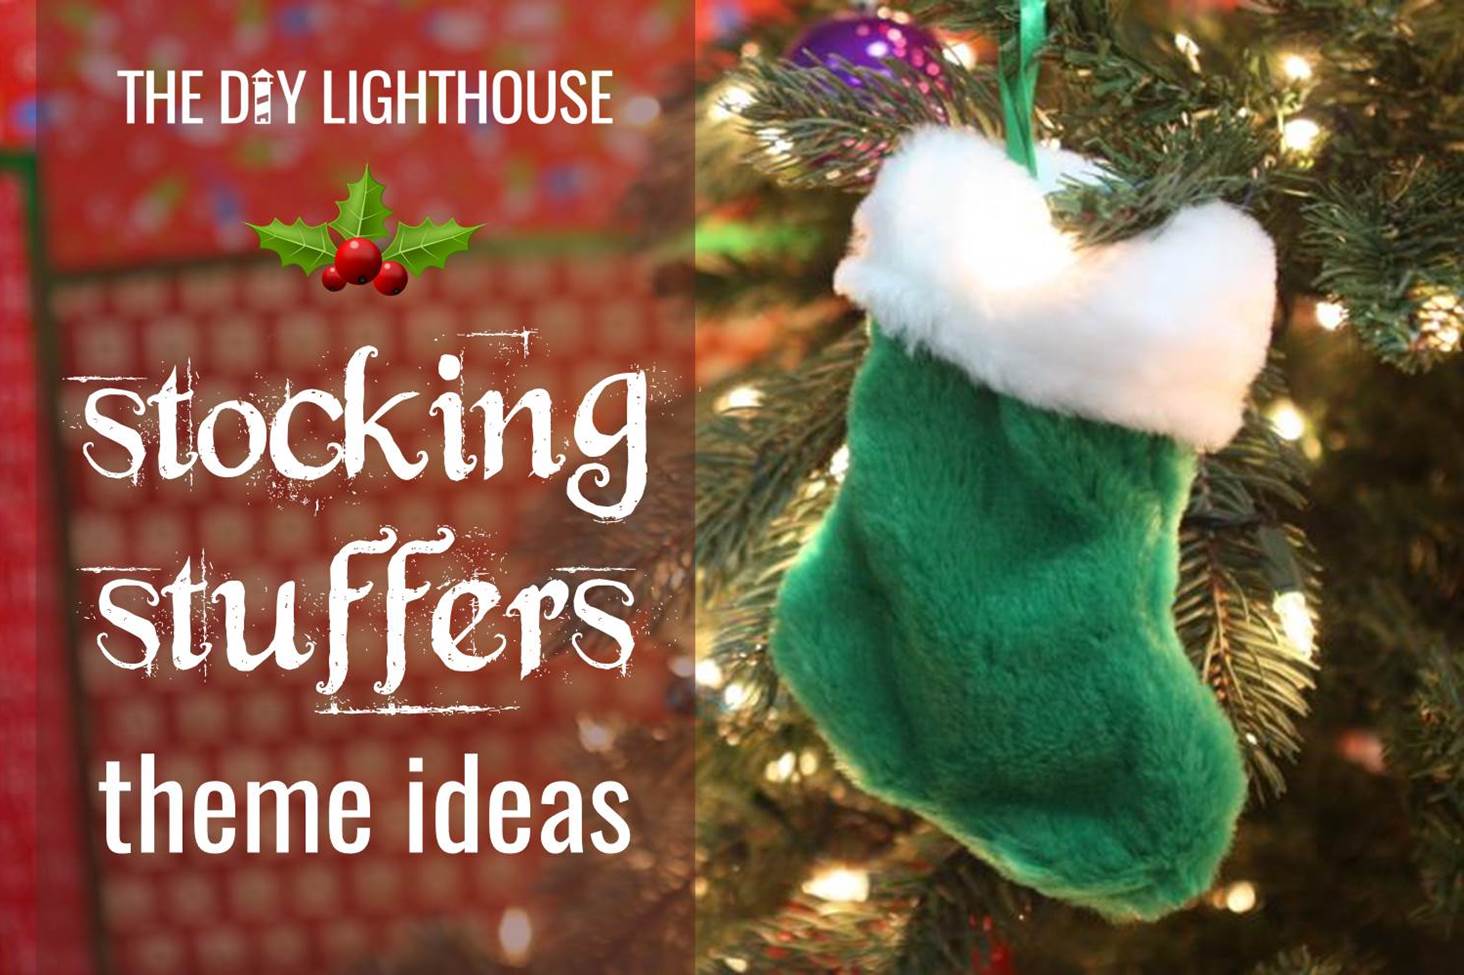 https://thediylighthouse.com/wp-content/uploads/2015/12/9-stocking-stuffer-theme-ideas.jpg